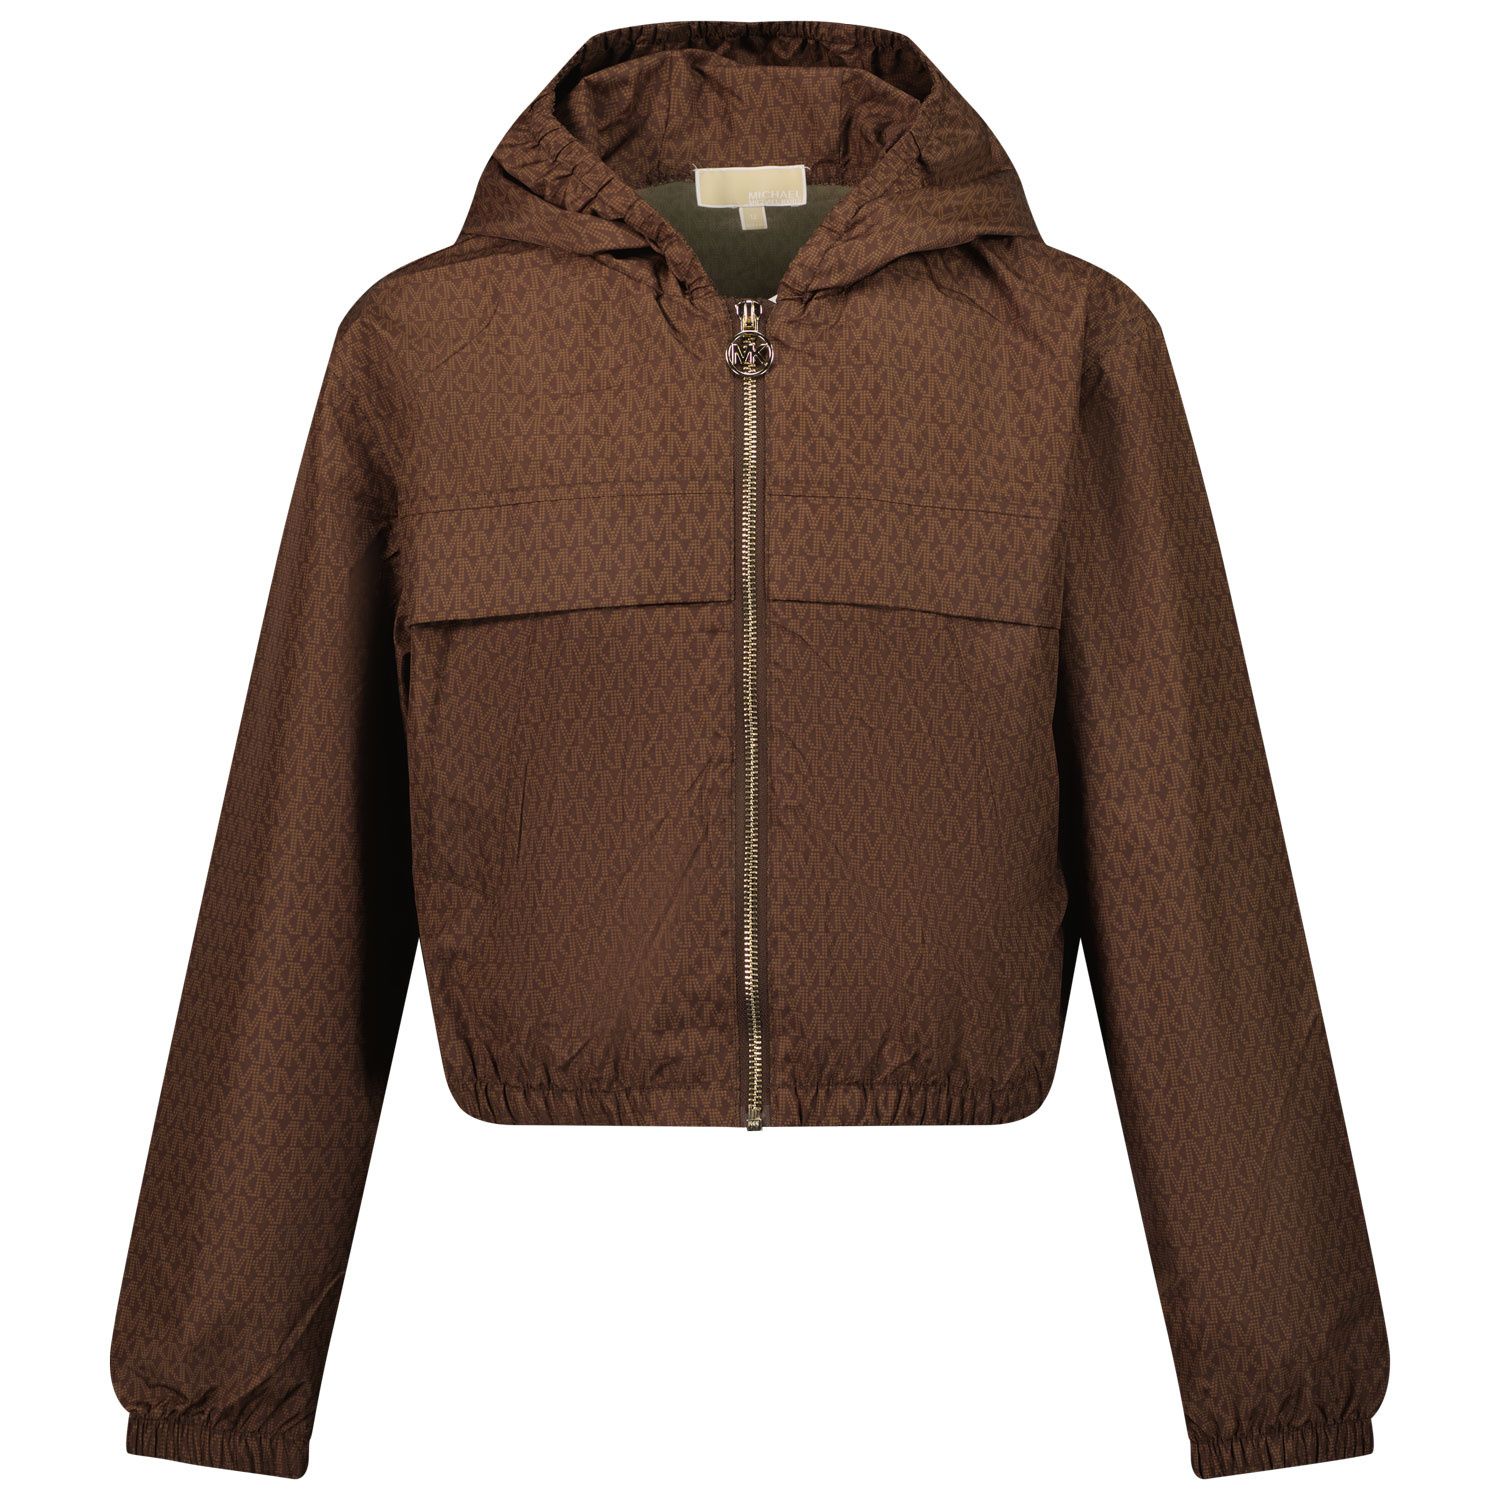 Picture of Michael Kors R16102 kids jacket brown